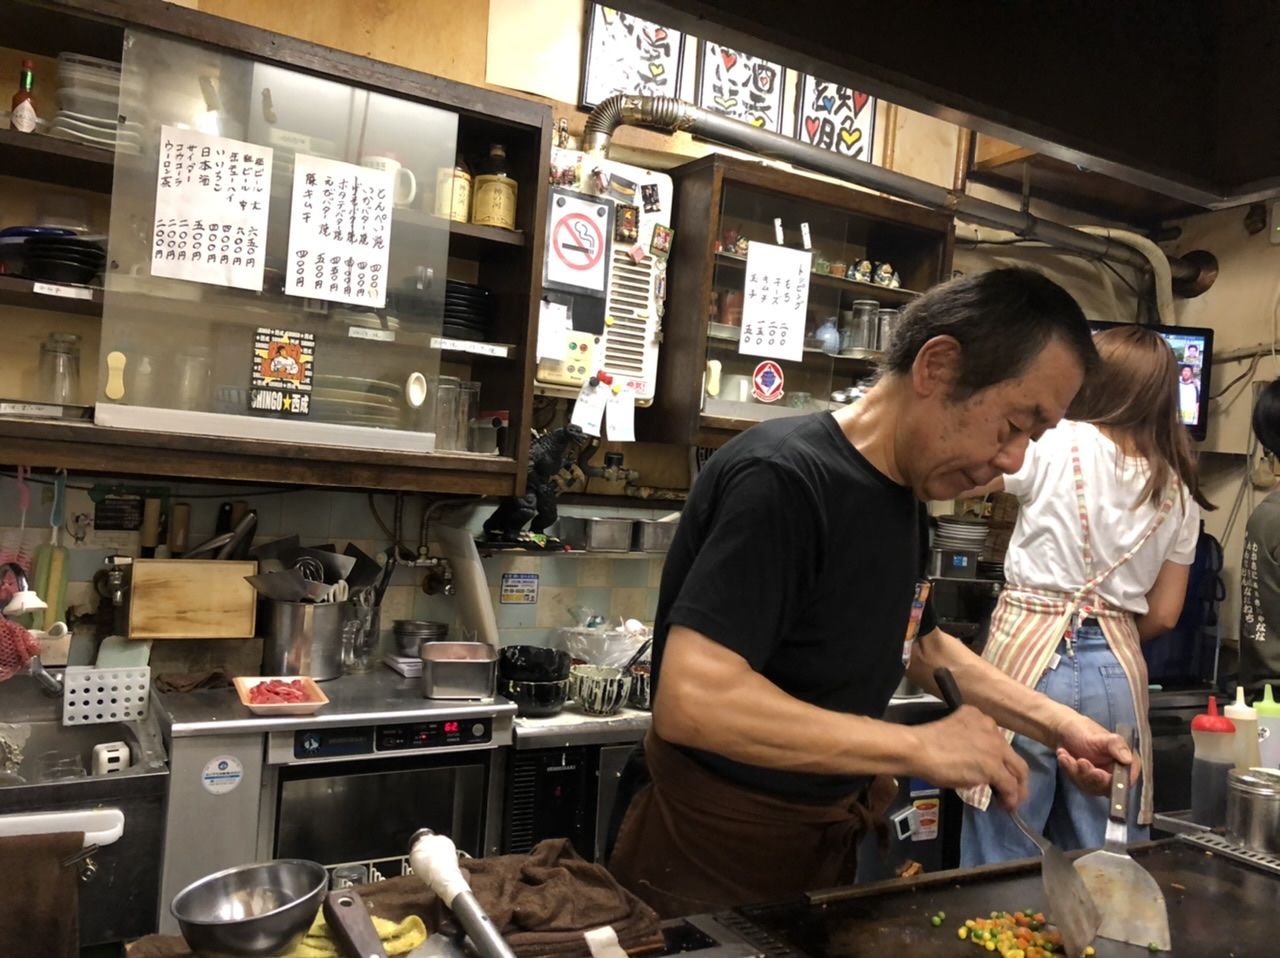 The owner of Okonomiyaki cooking